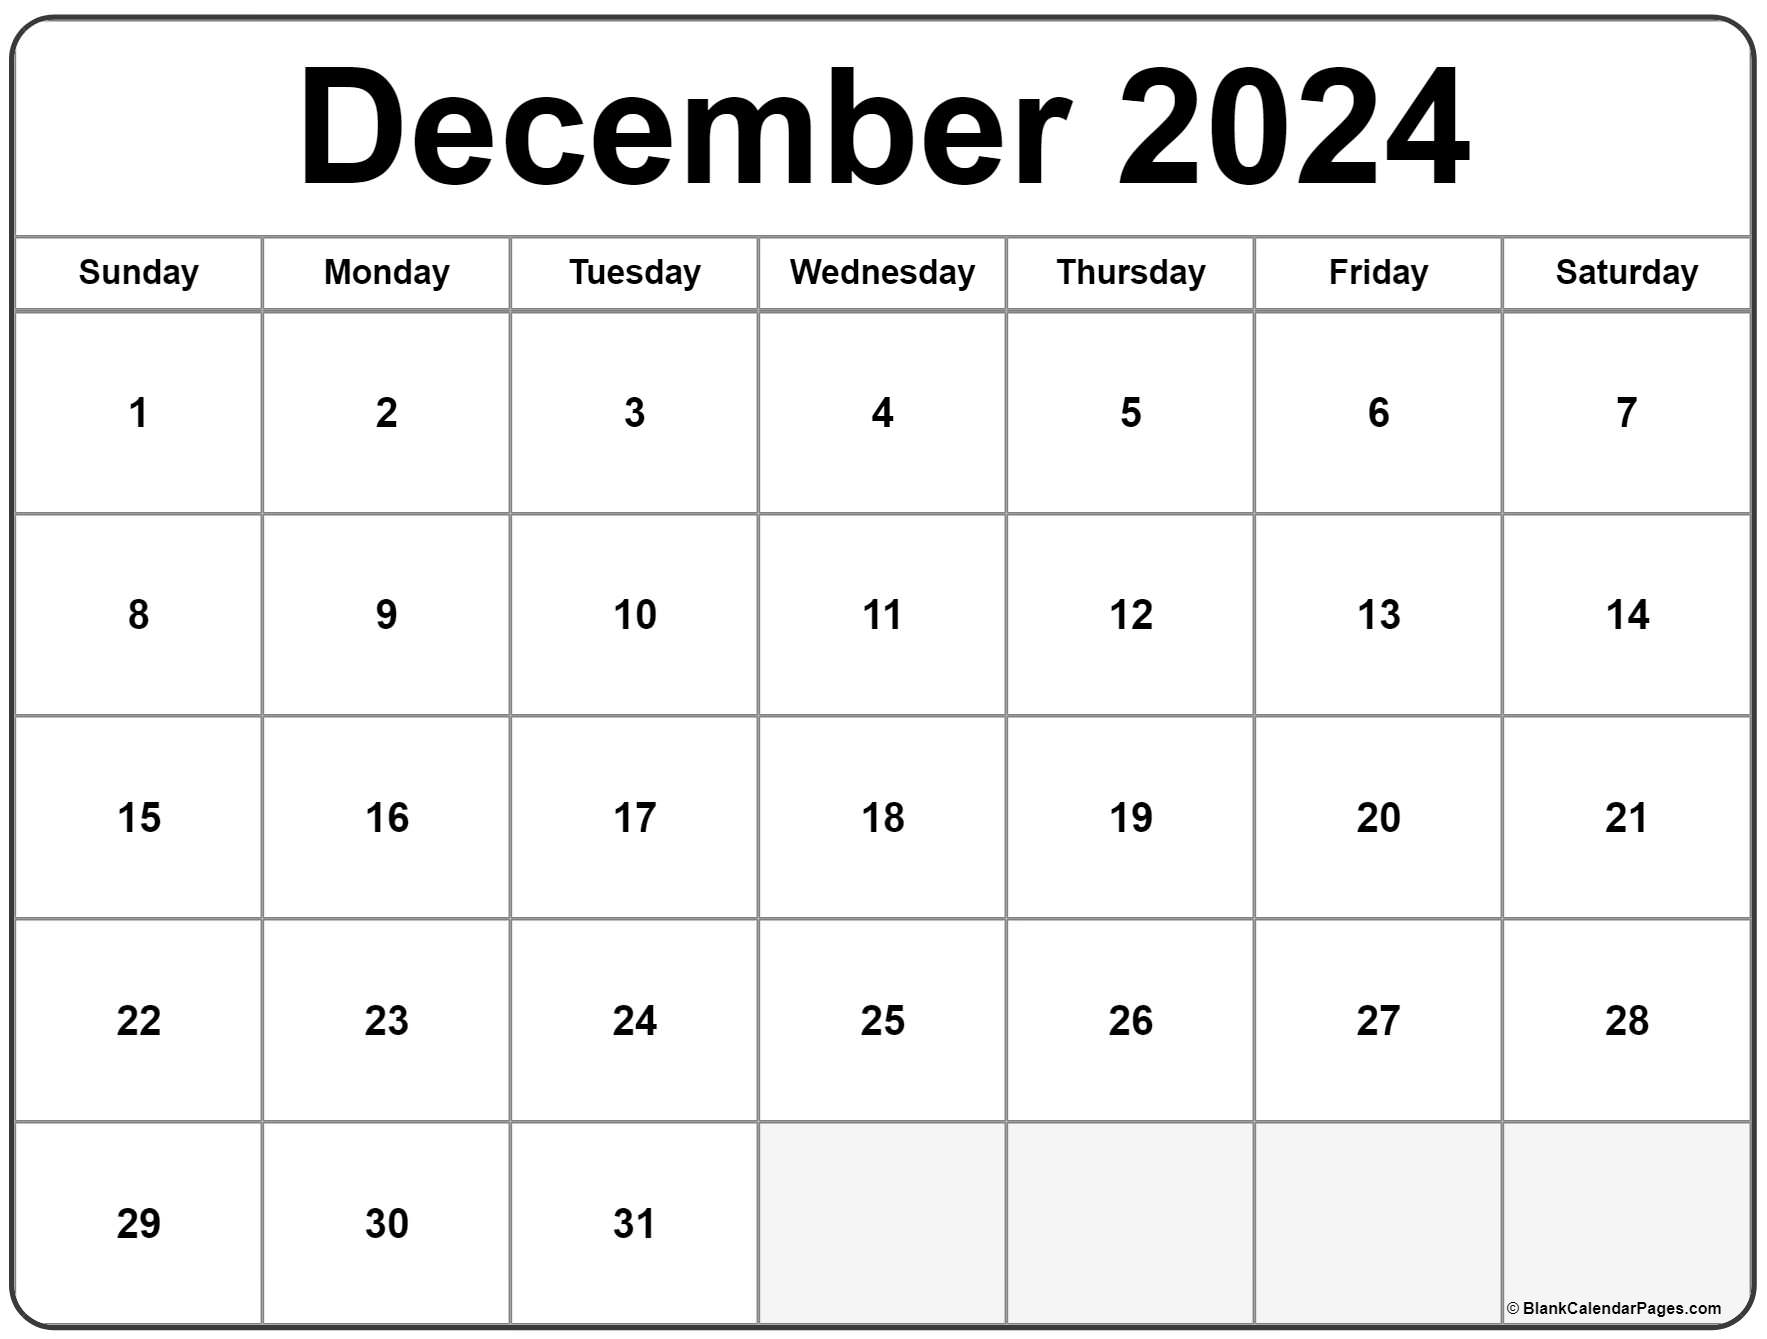 December 2022 calendar free printable calendar templates